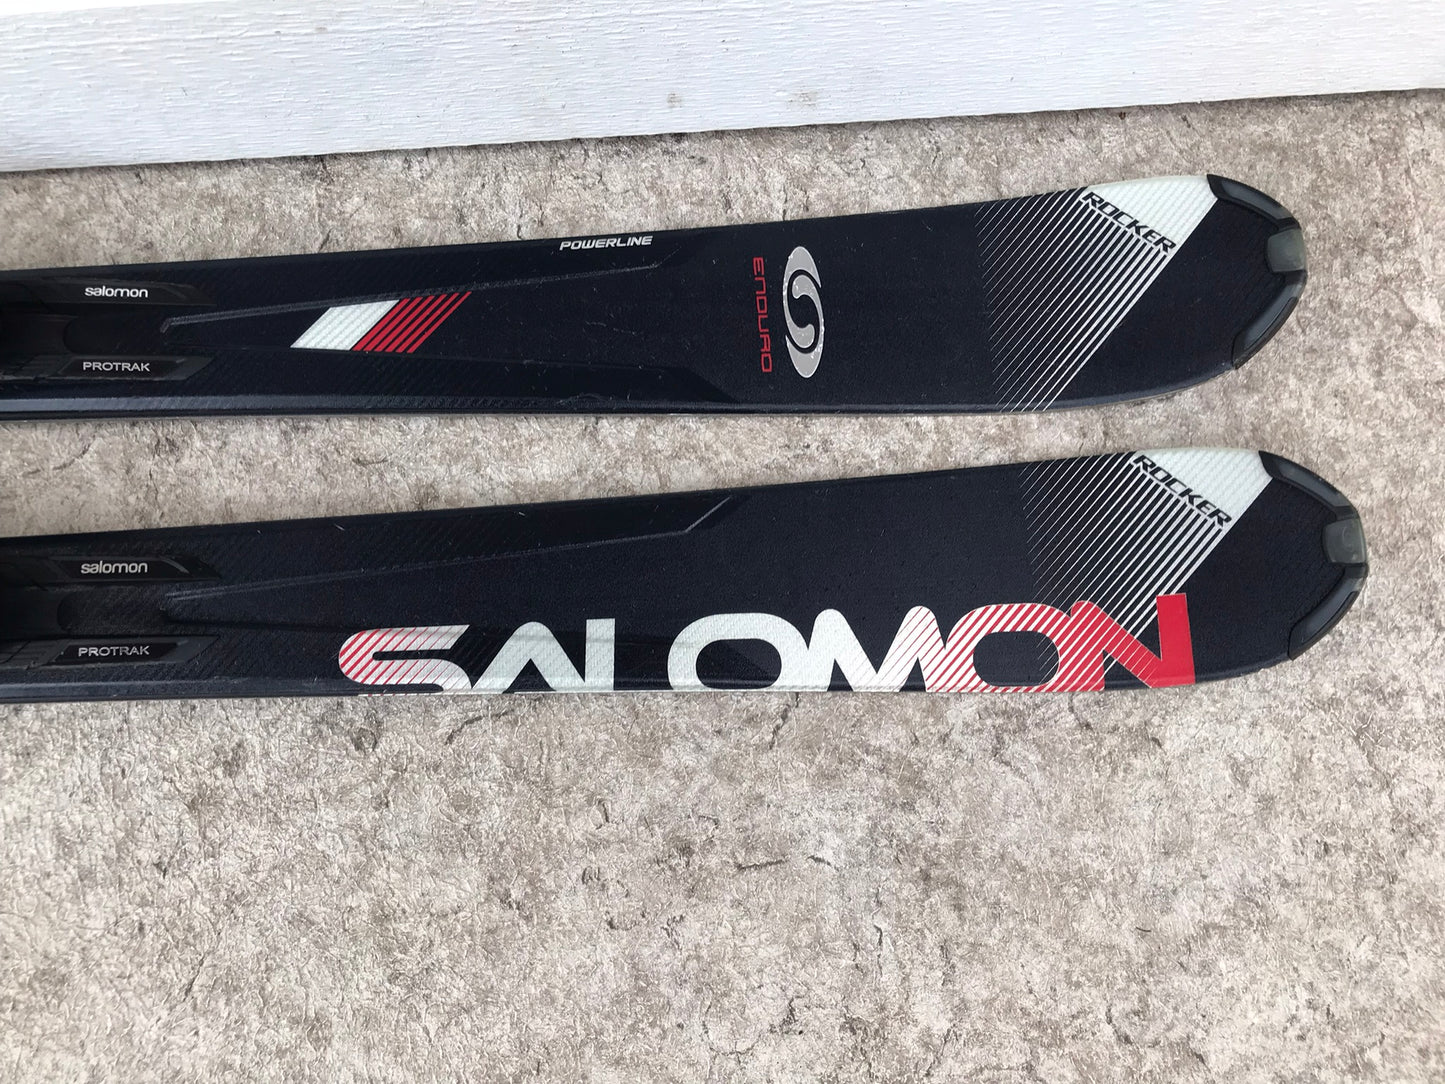 Ski 161 Salomon Black Red Grey Parabolic With Bindings Used Twice